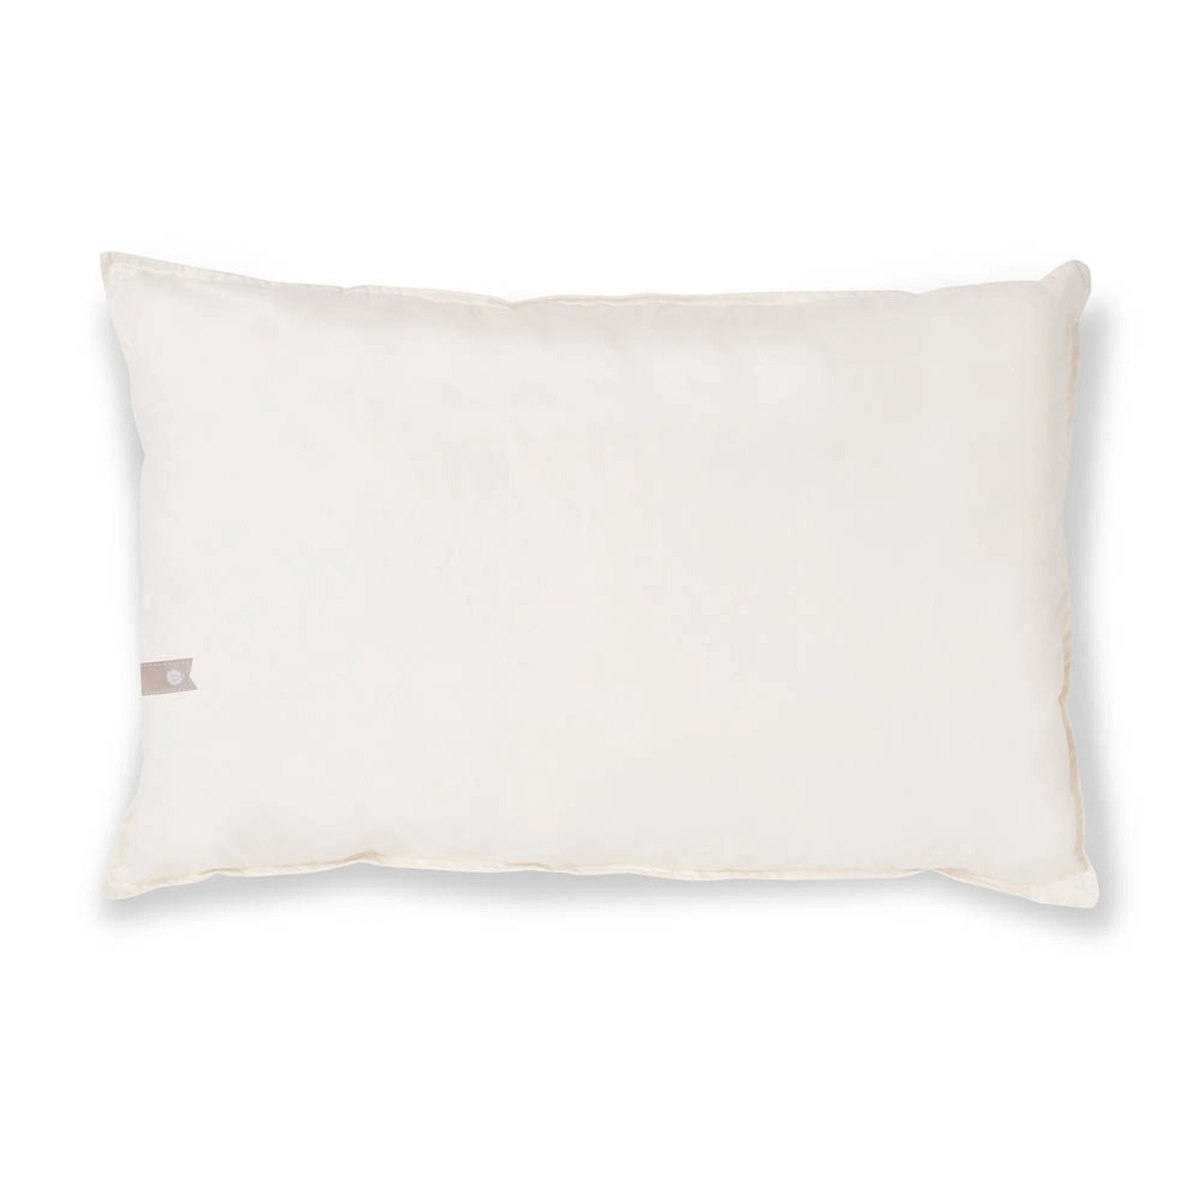 Image of The Little Green Sheep Organic Children's Pillow-40x60cm